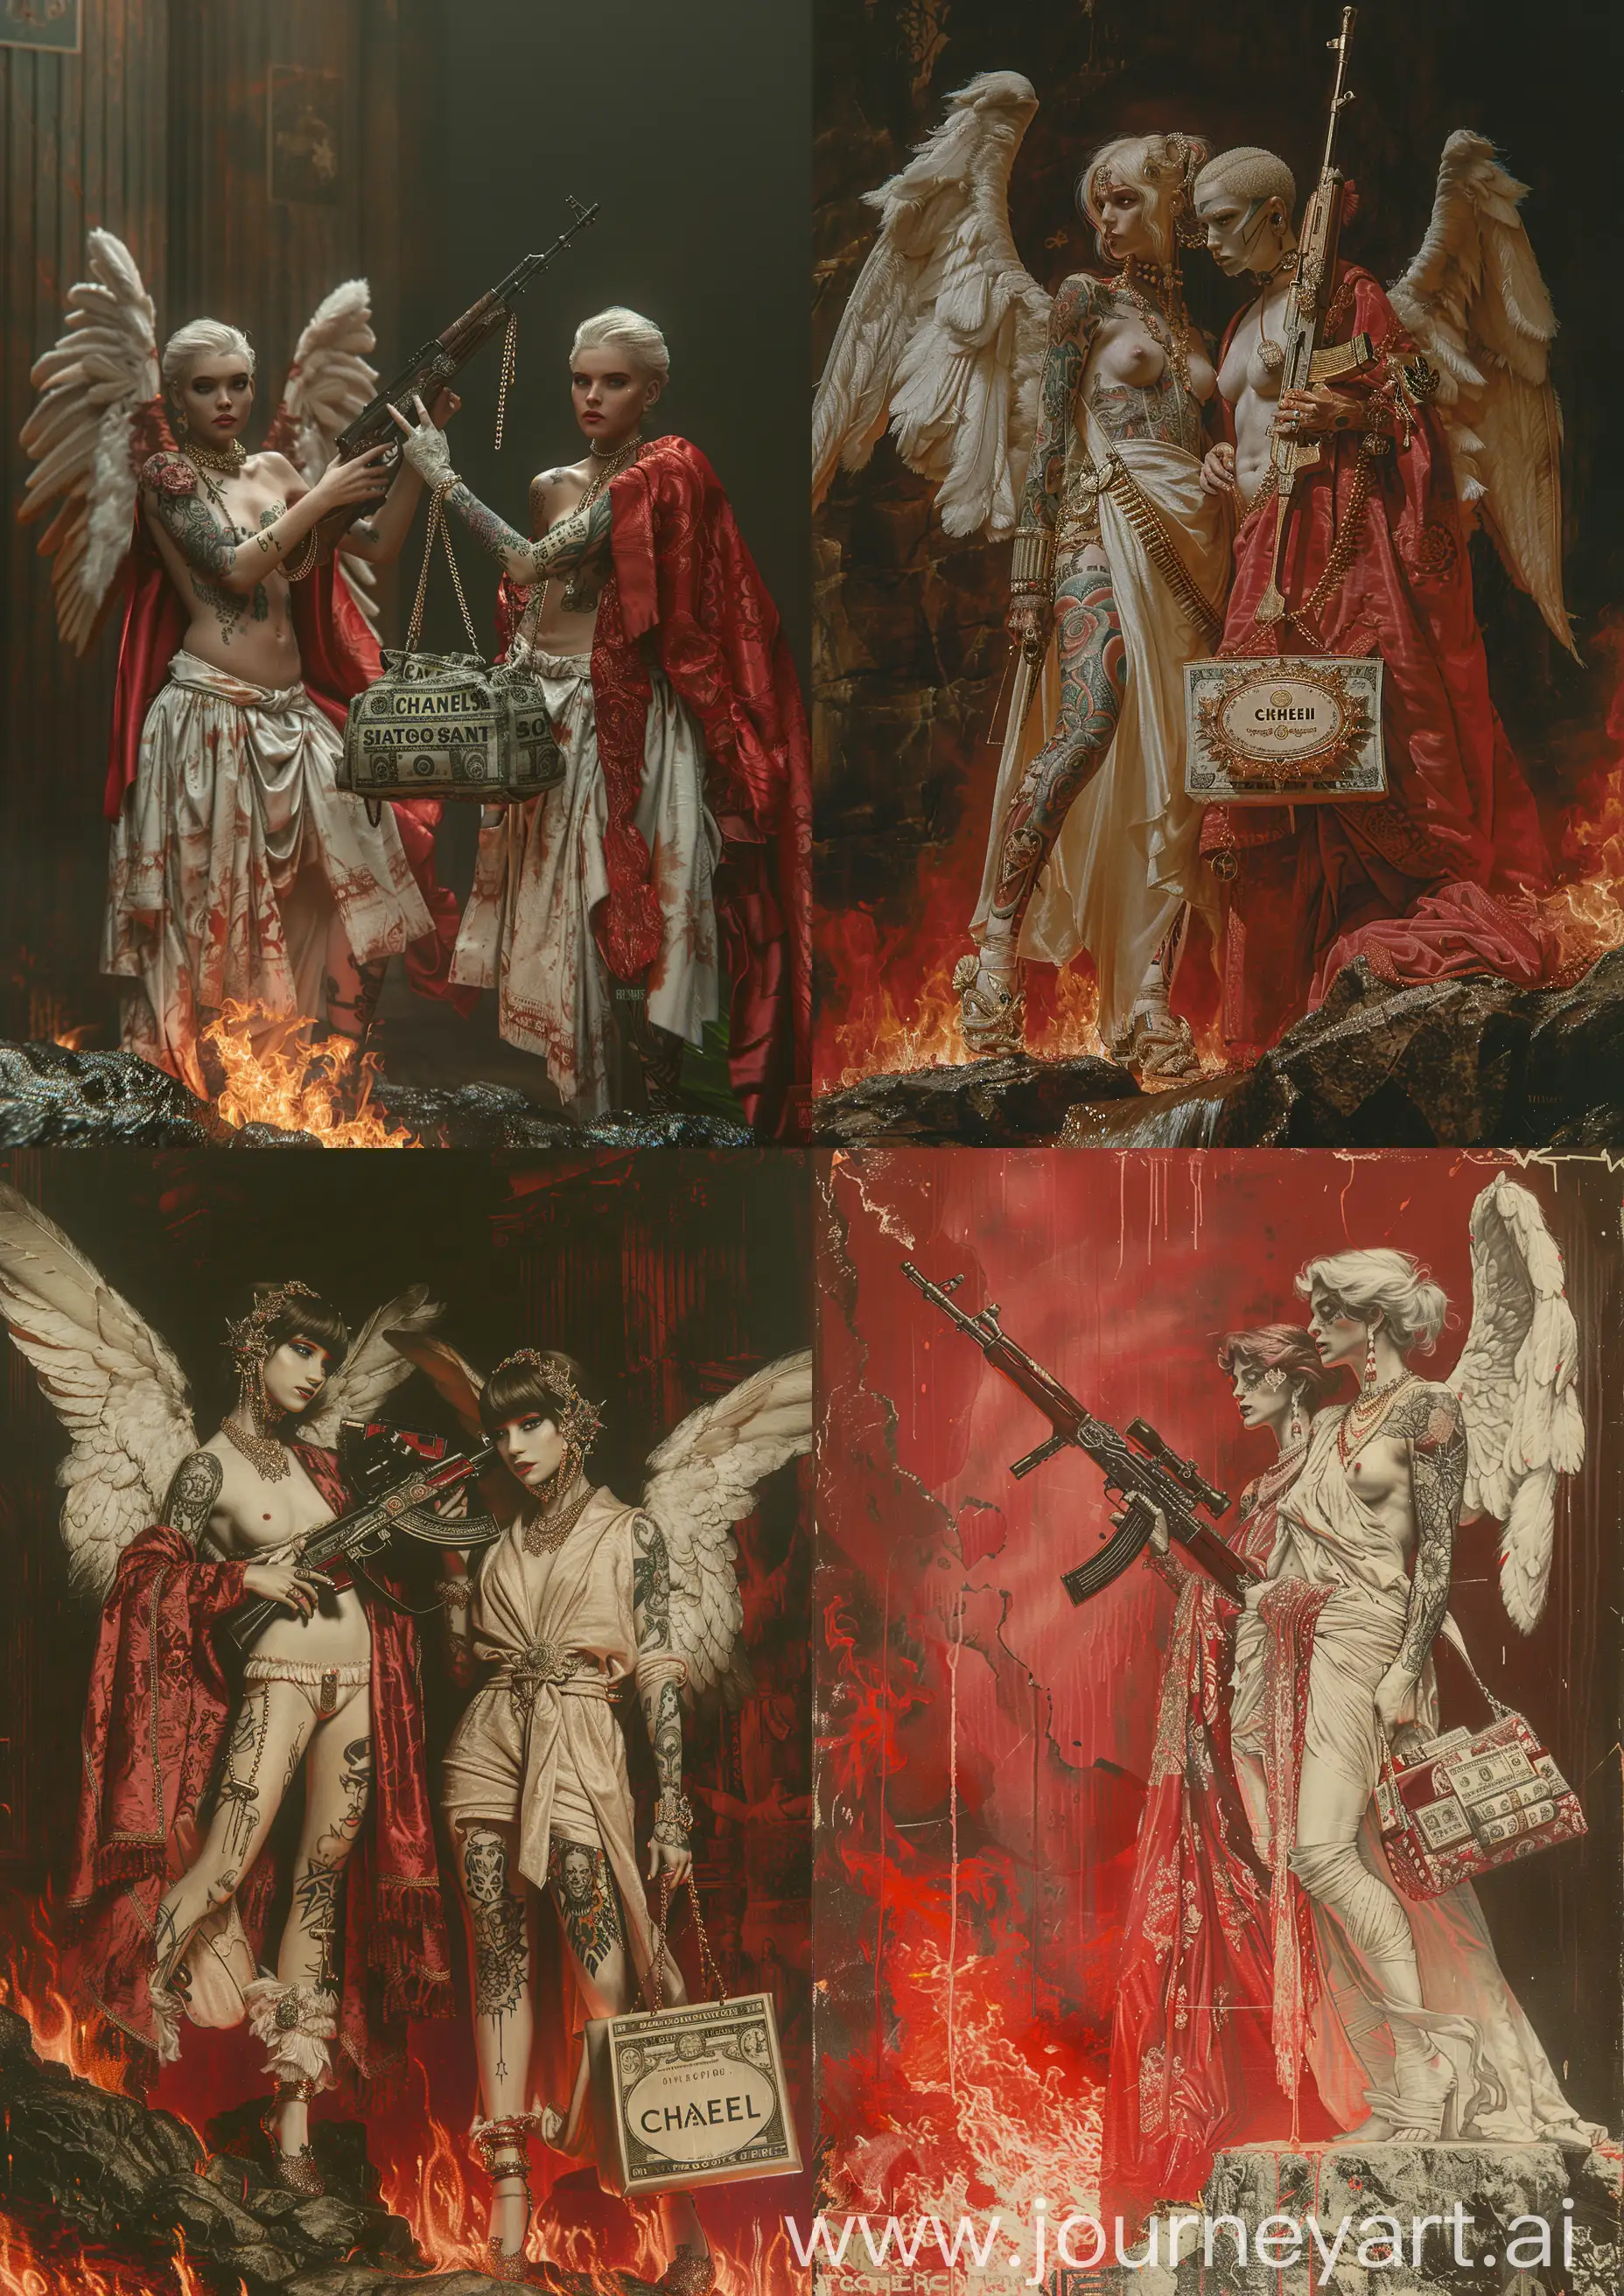 Futuristic-Angel-Warriors-Tattooed-Females-with-Kalashnikovs-and-CHANEL-Bags